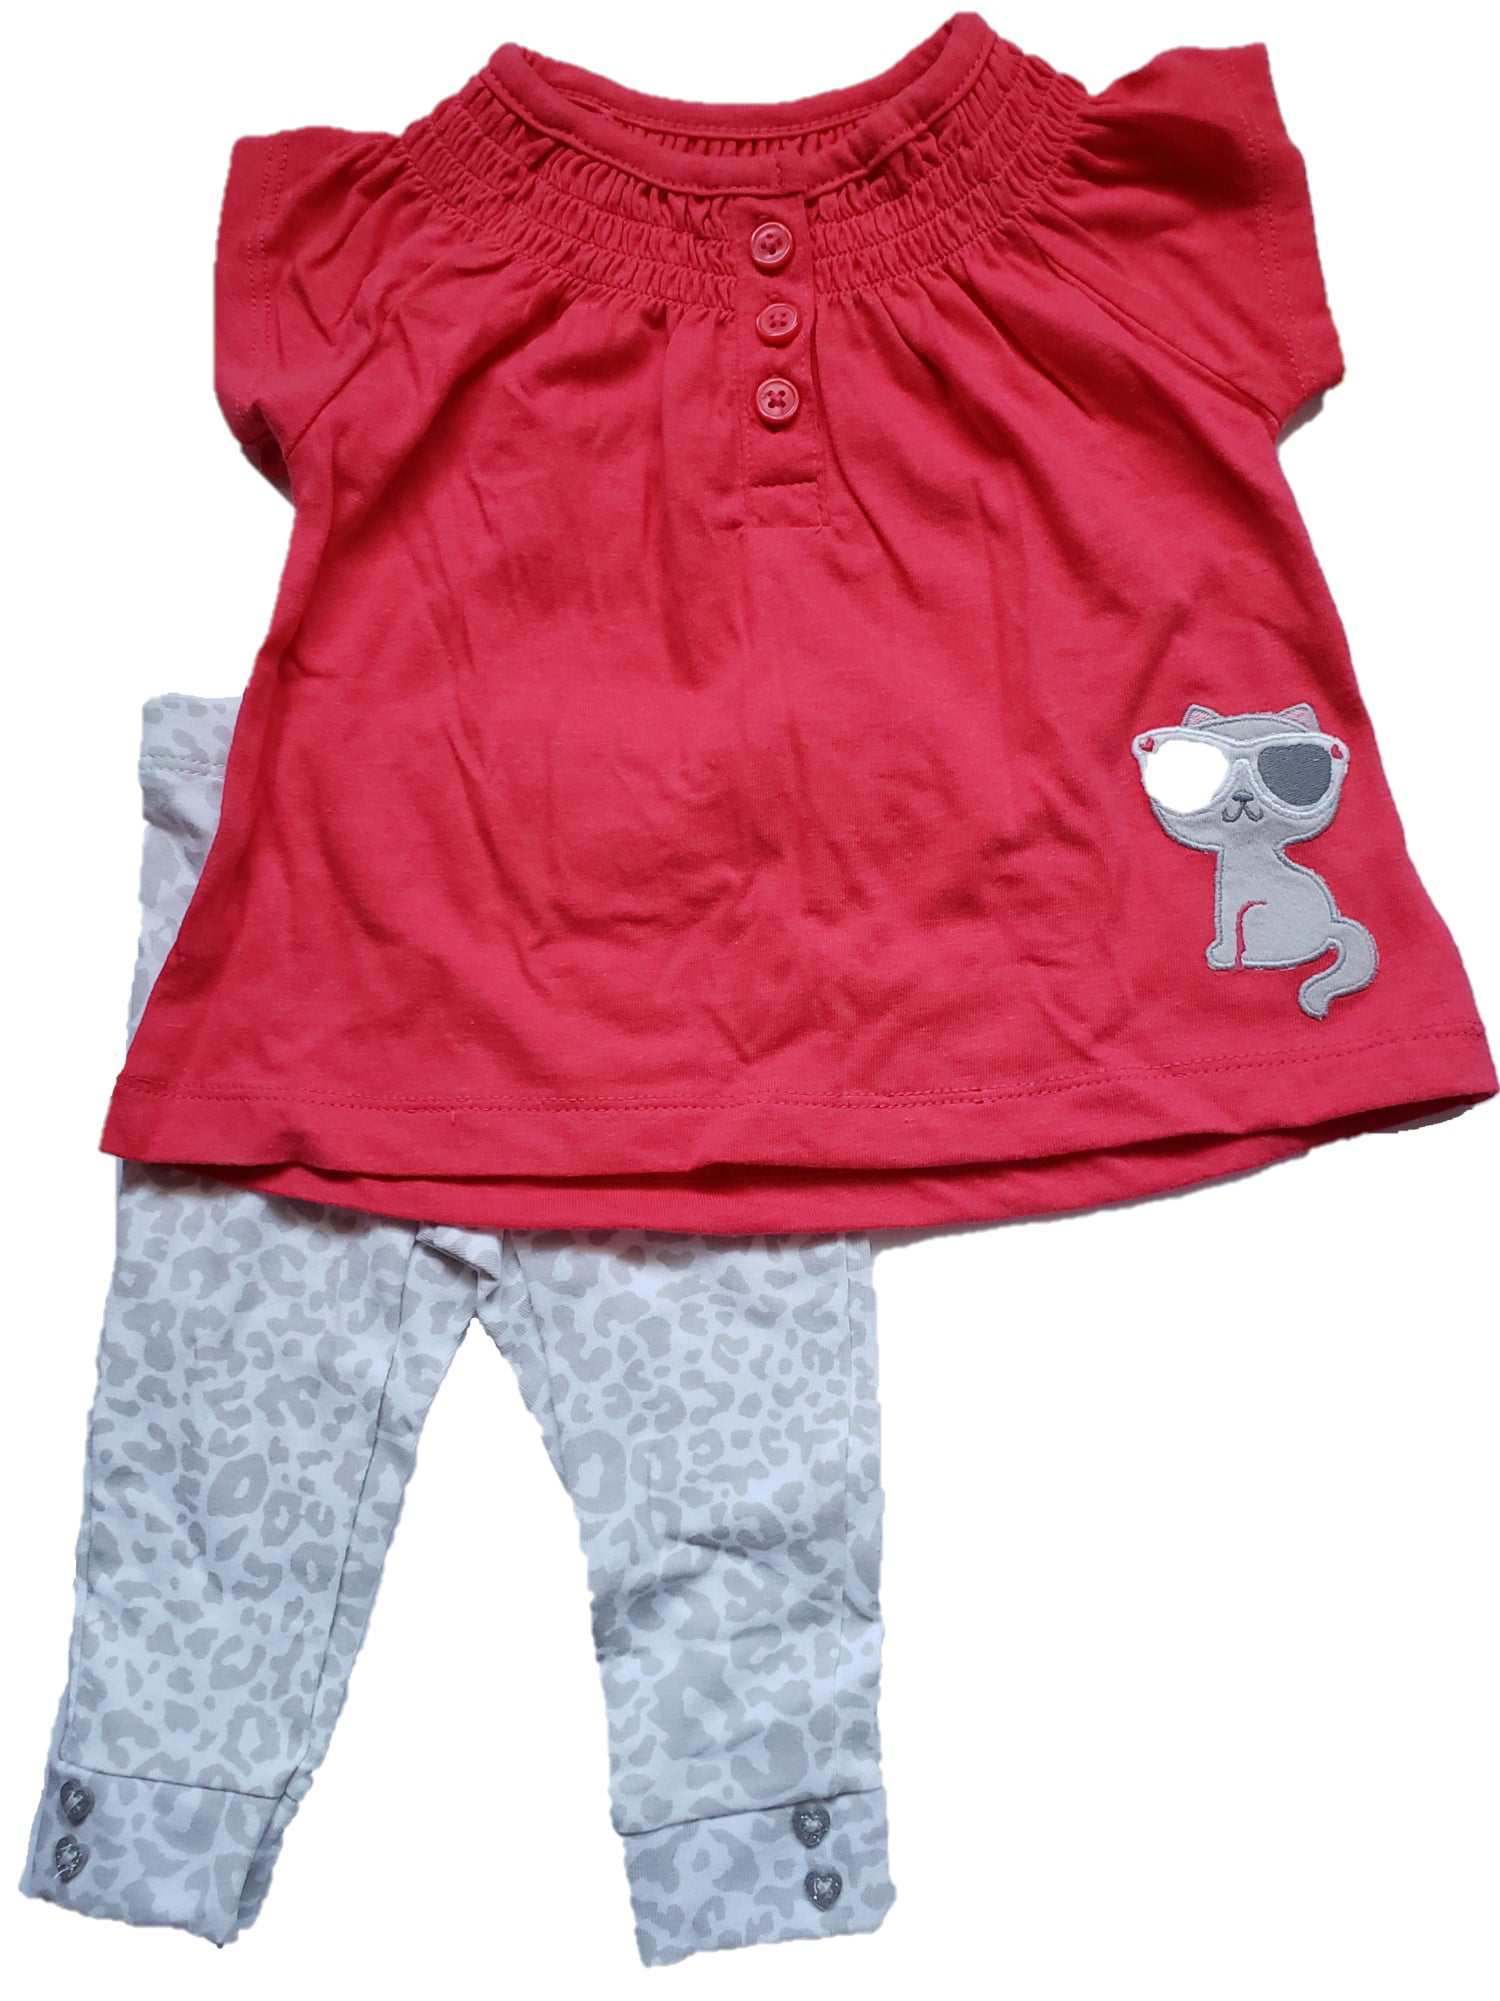 Baby Girl Spanish Mabini Kids Balloon Short Top Red Blue 3-6 M 6-9 M 9-12 months 